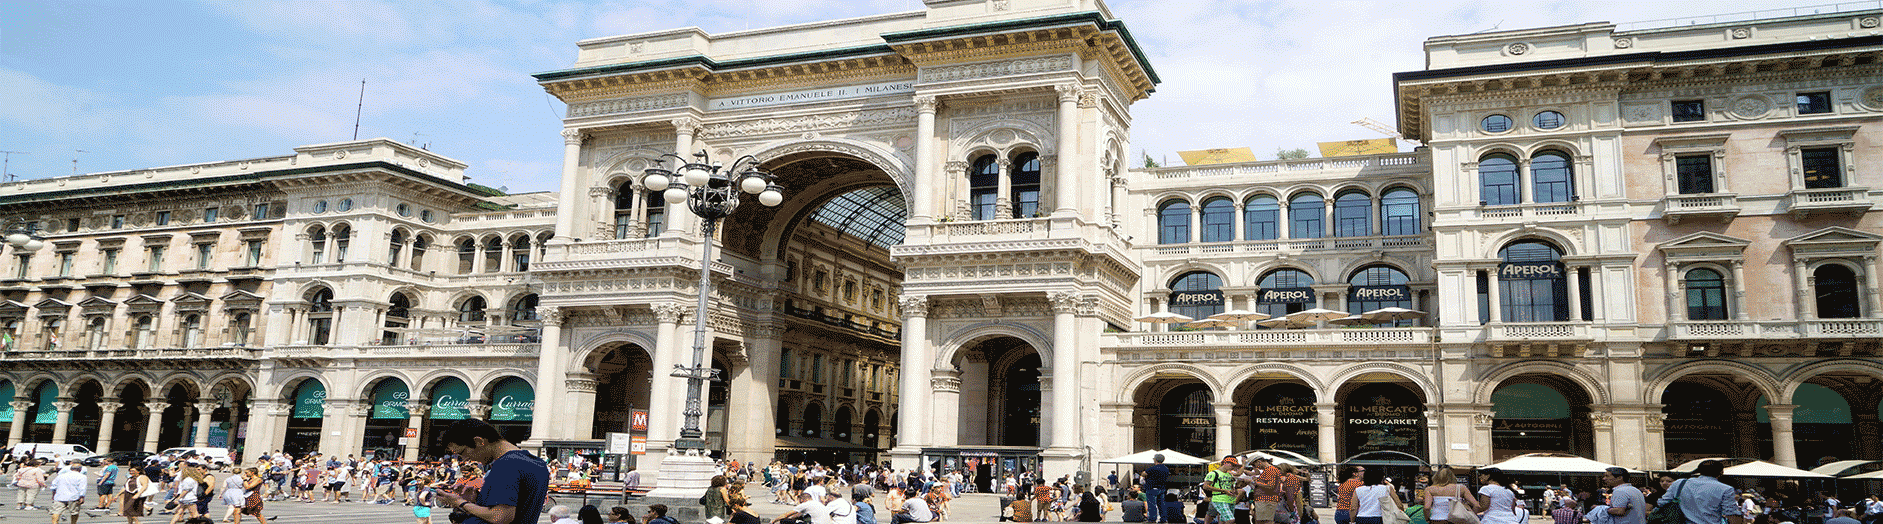 Galleria Vittorio Emanuele II in Milano. It's one of the world's